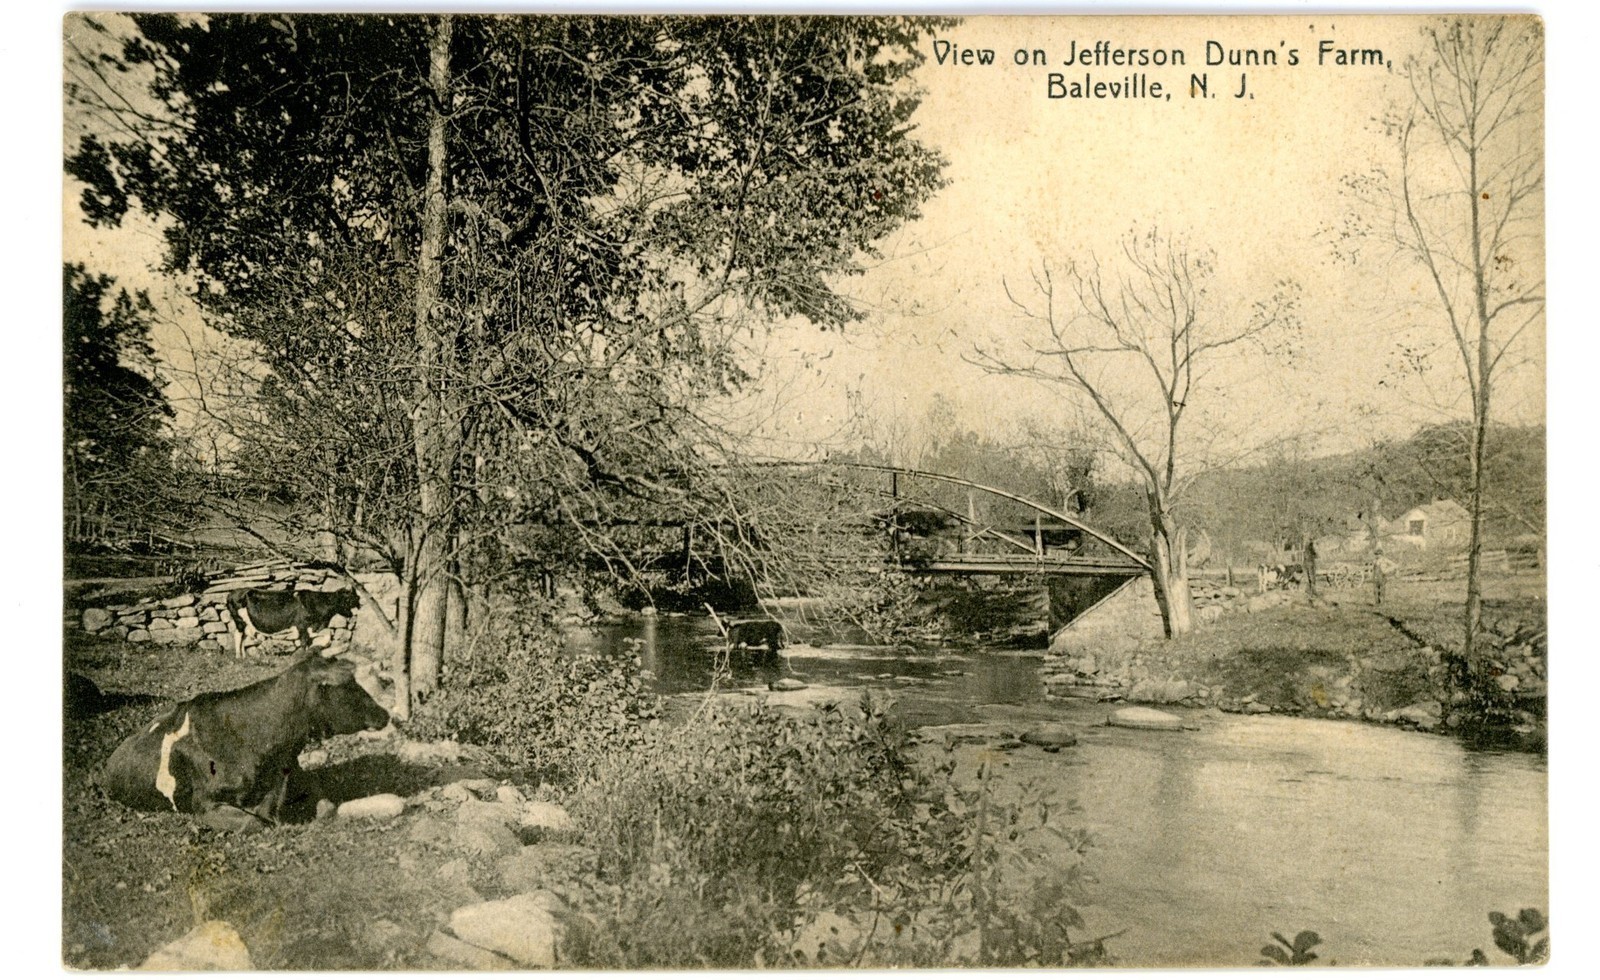 Baleville - View on Jefferson Dunns Farm - c 1910